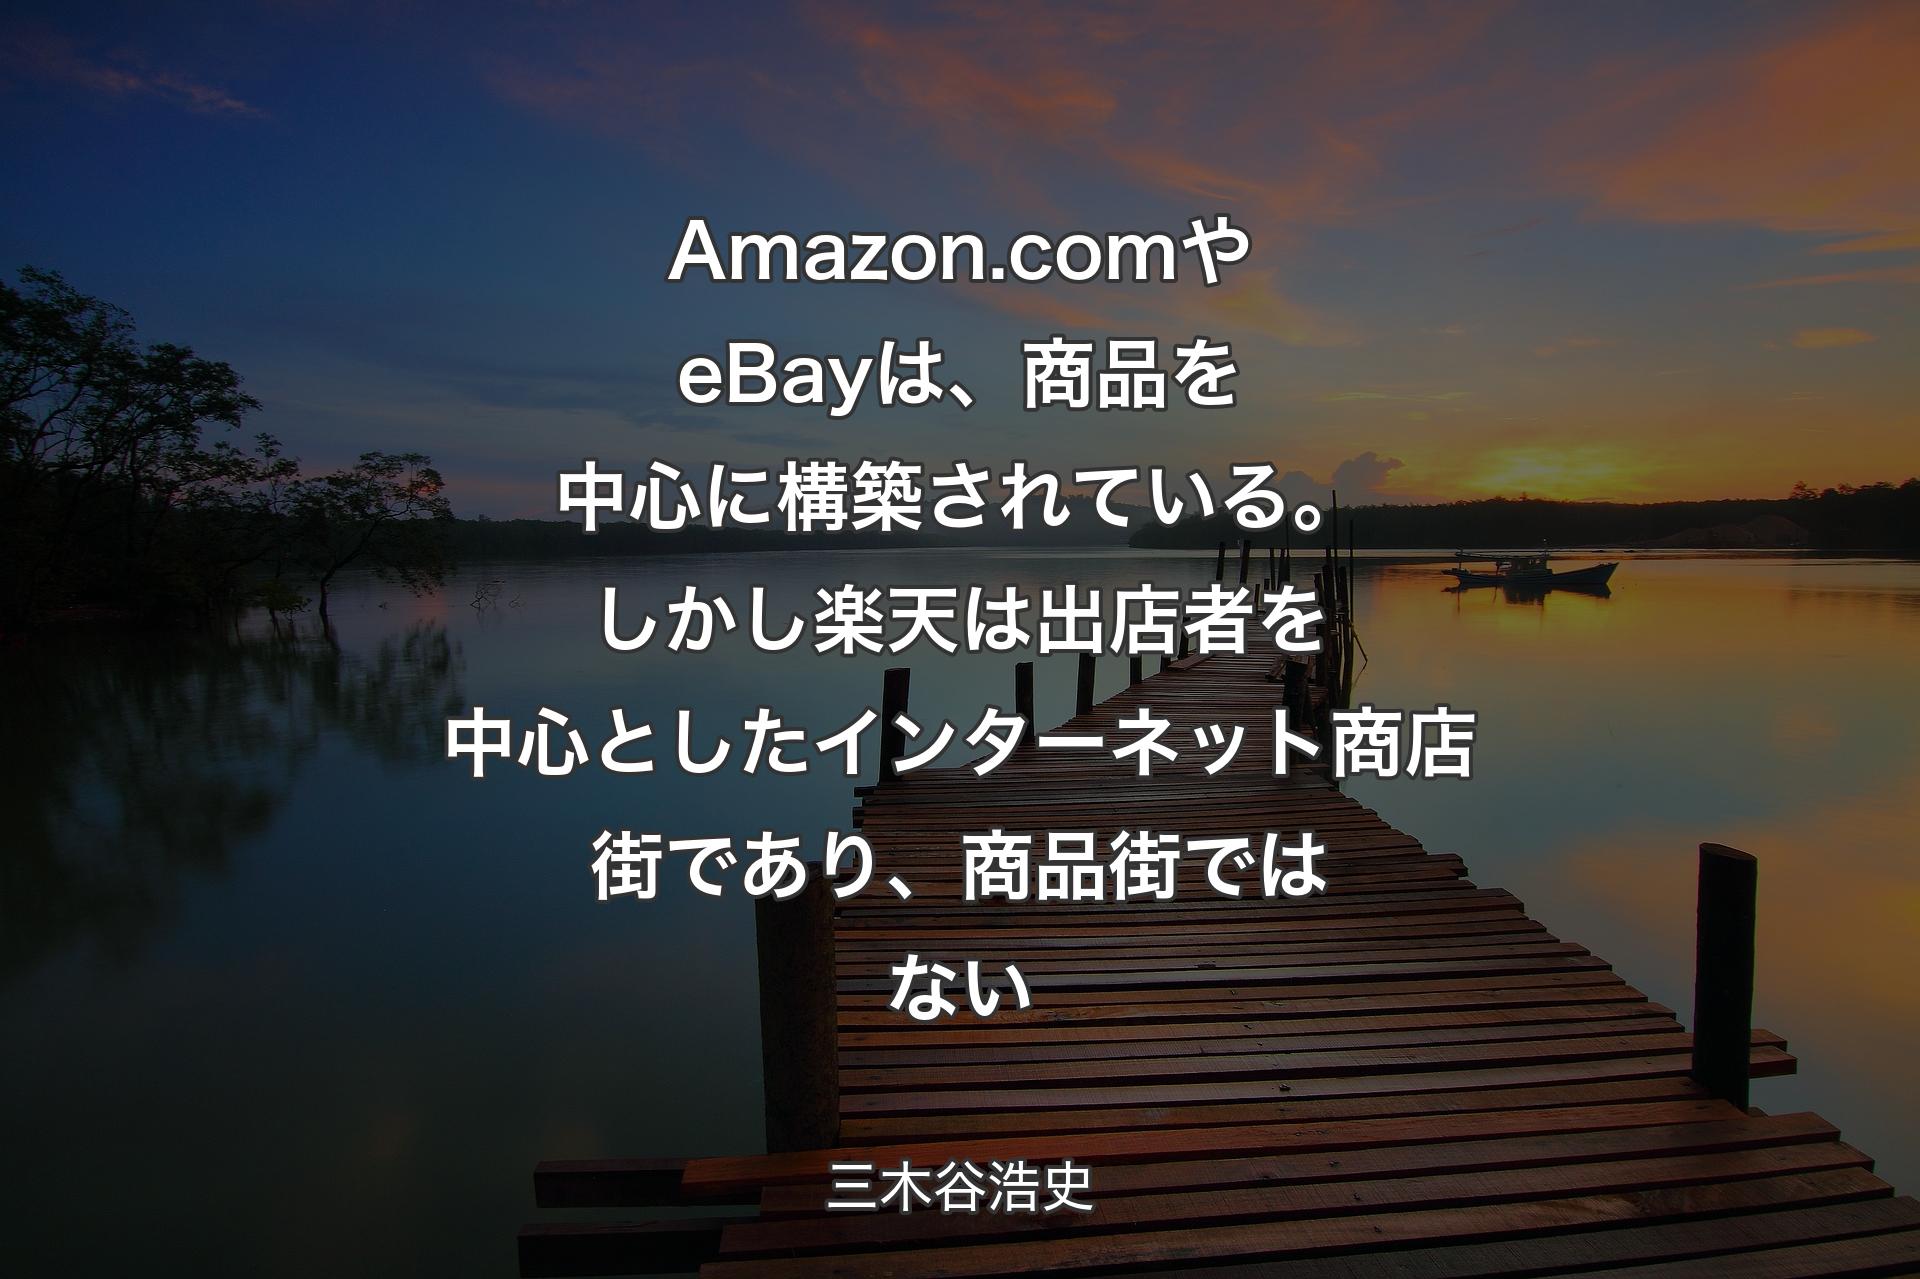 Amazon.com やeBayは、商品を中心に構築されている。しかし楽天は出店者を中心としたインターネット商店街であり、商品街ではない - 三木谷浩史